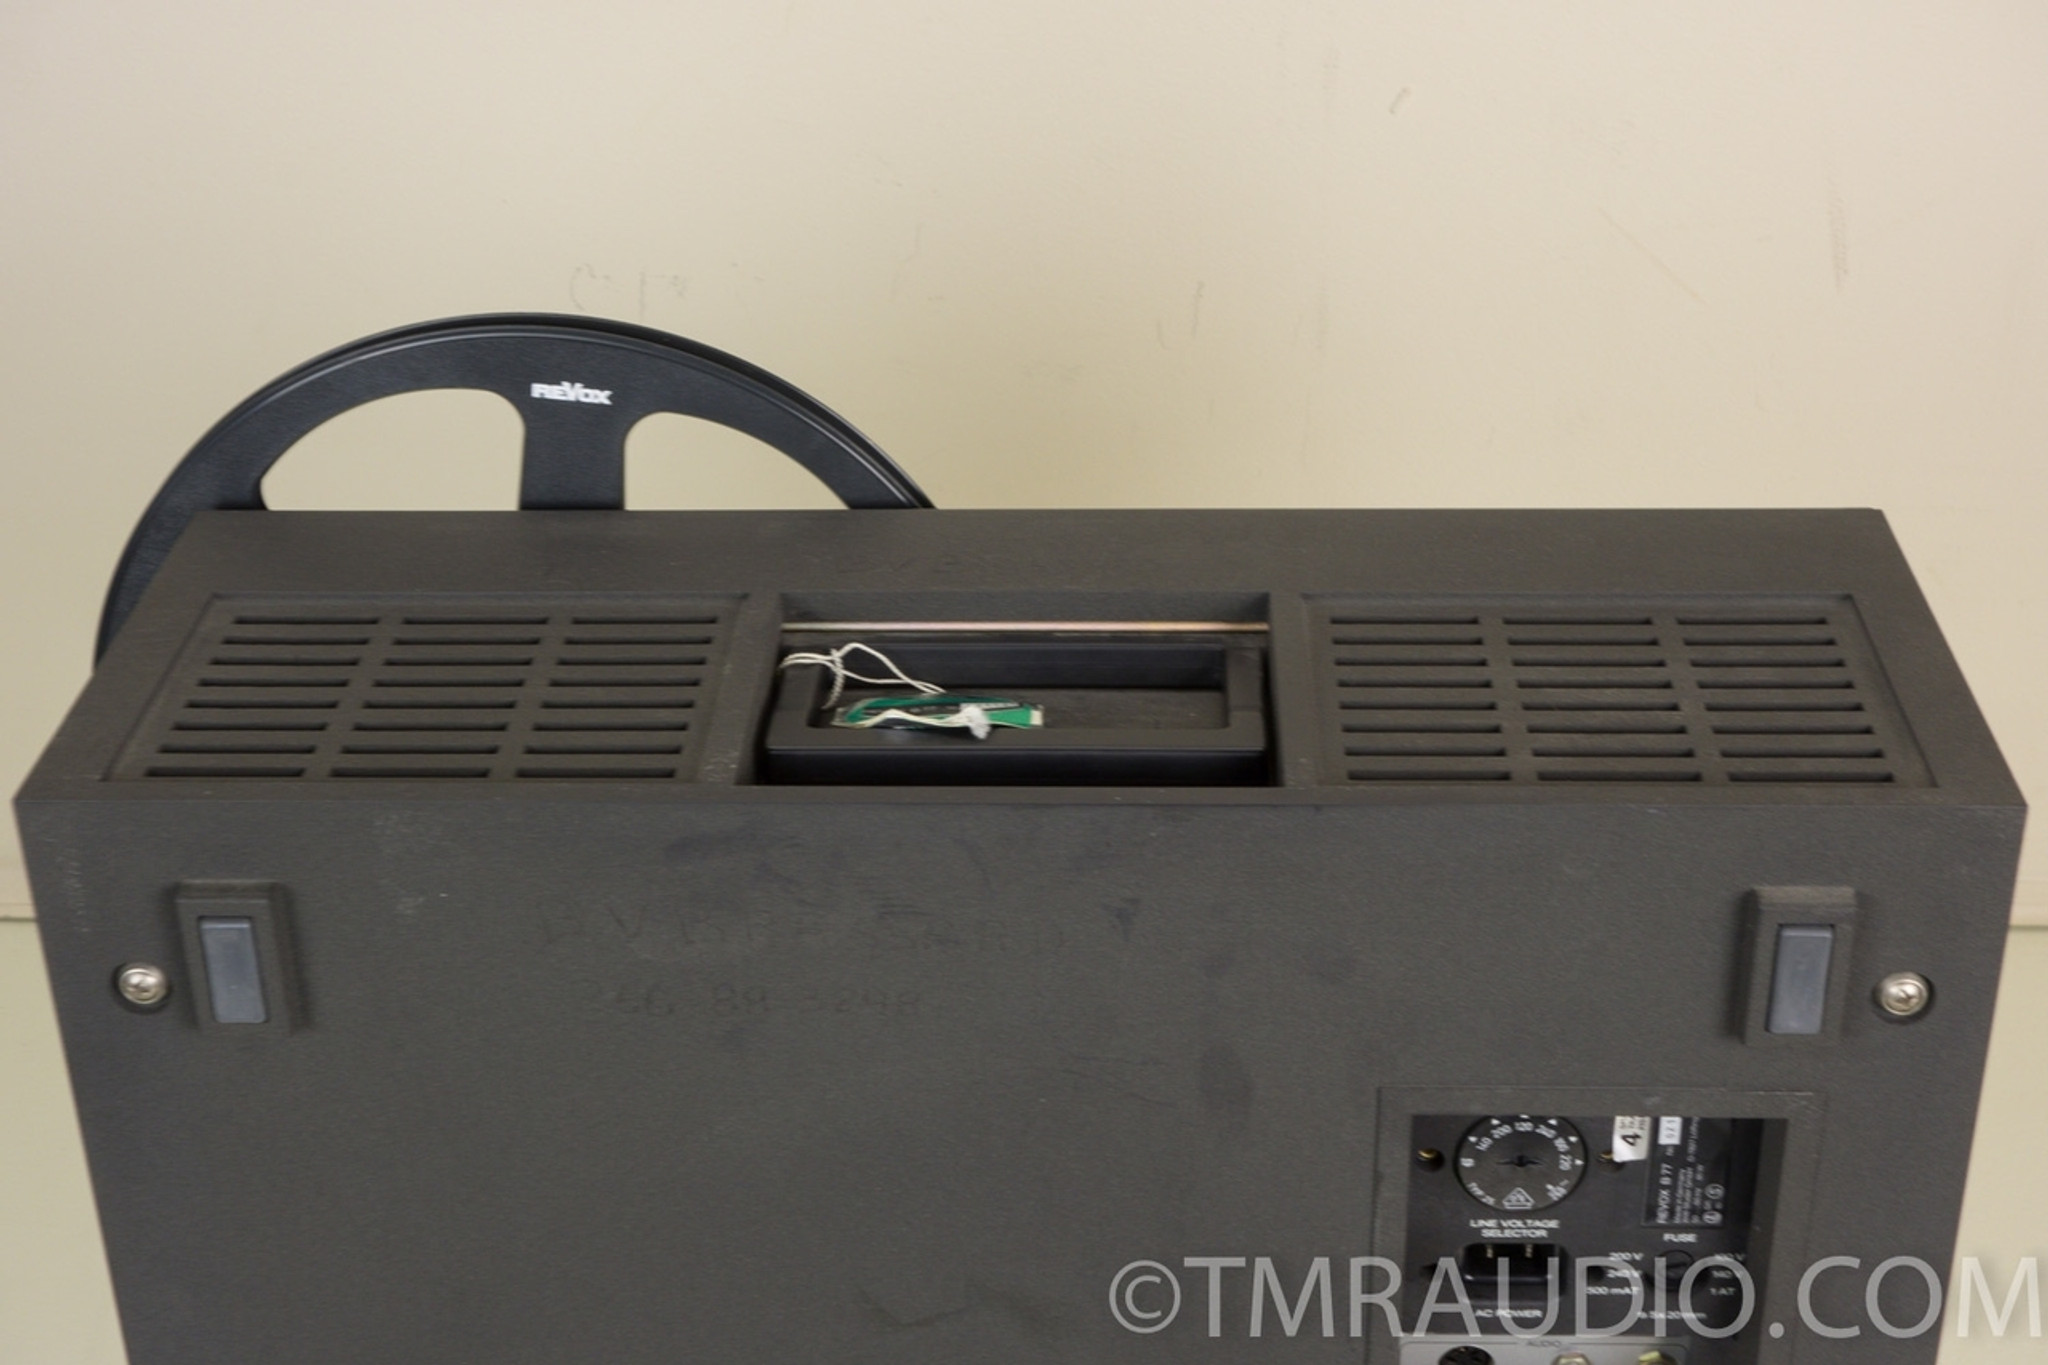 Studer Revox B77 Vintage Reel to Reel Tape Recorder; Factory Box Type 14104